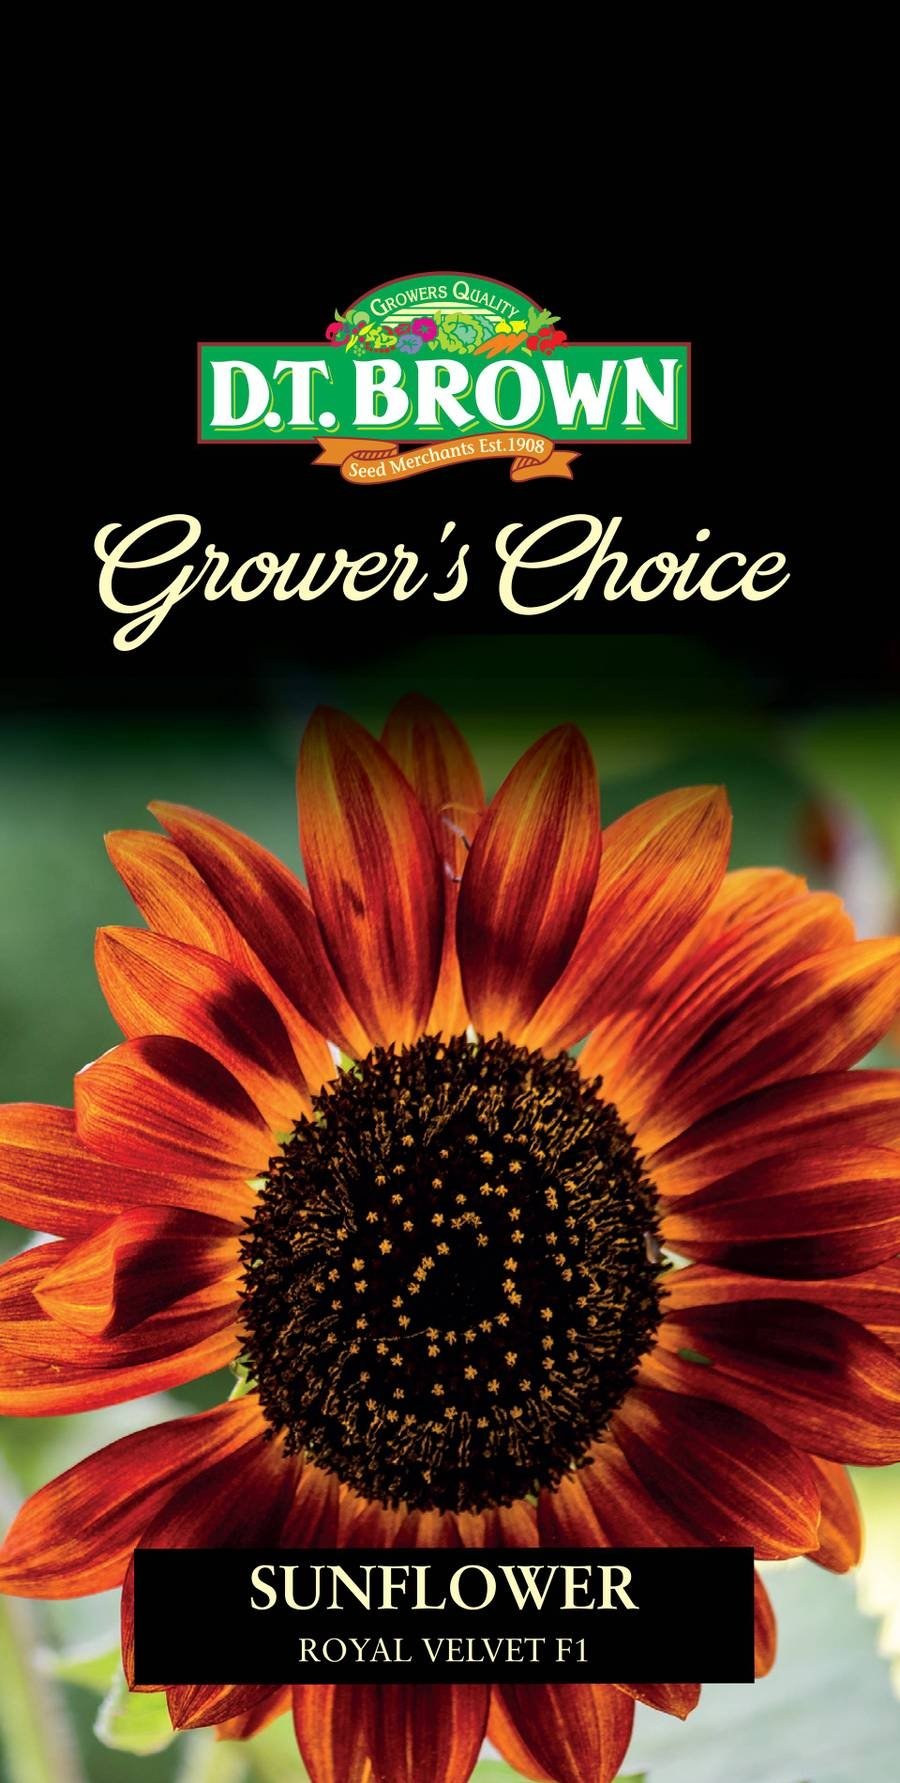 DT Brown Growers Choice Sunflower Royal Velvet - Woonona Petfood & Produce